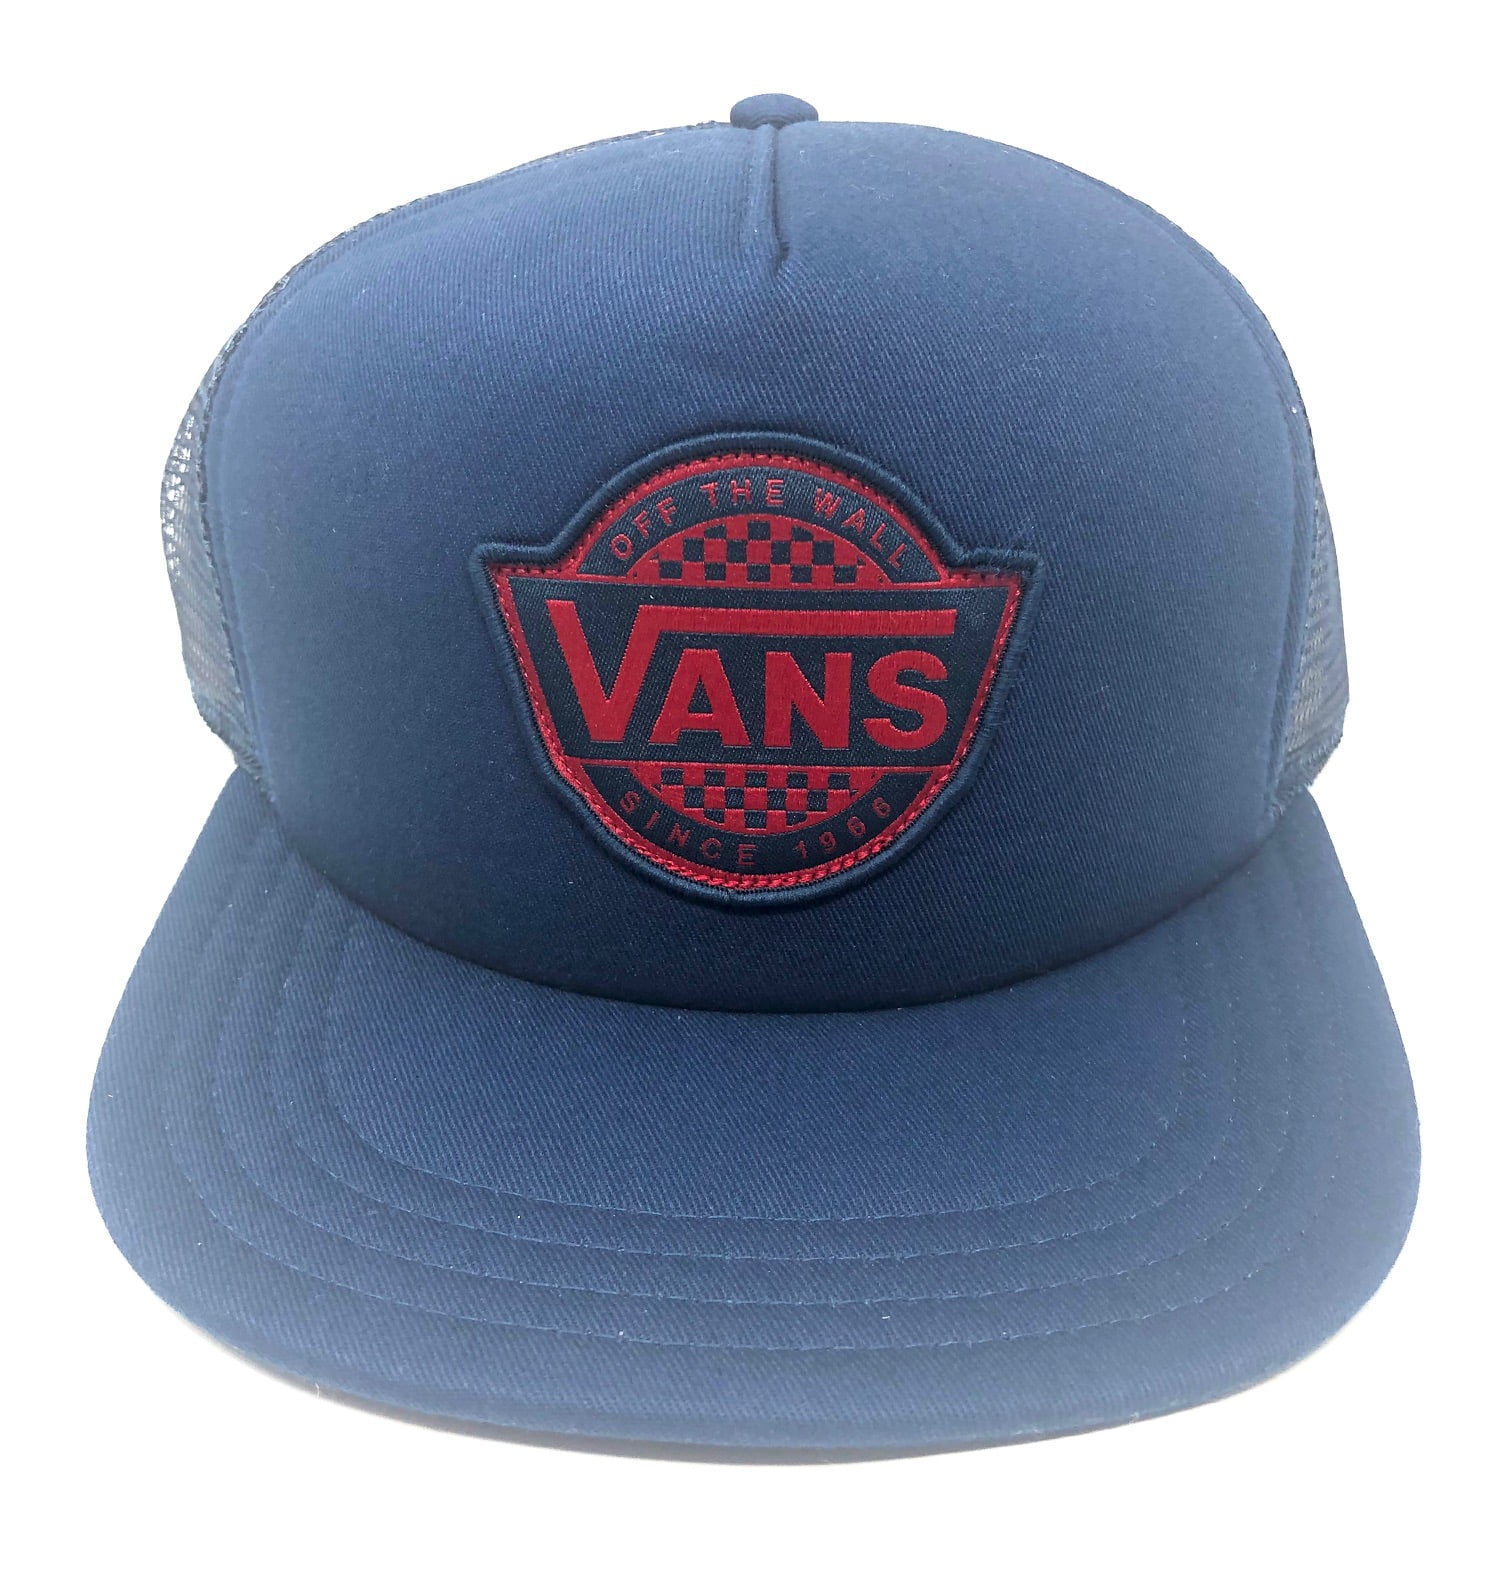 Lao Grund Jolly Vans Off The Wall Men's Retro Check Trucker Hat Cap - Navy Blue -  Walmart.com